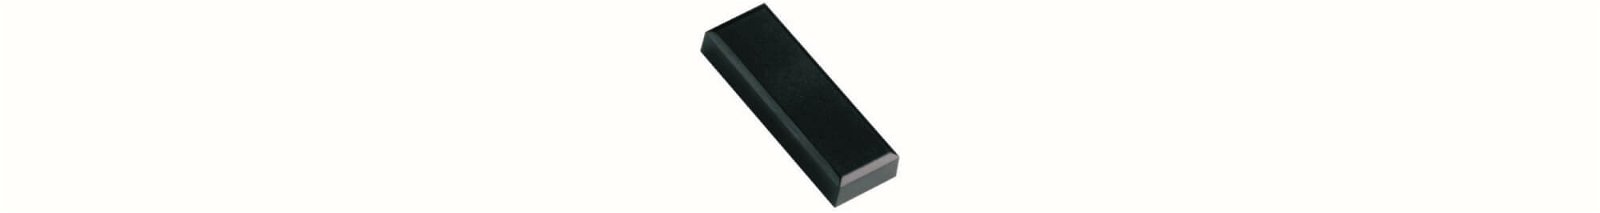 Facetterand-Magnet MAULpro 53 x 18 mm, 1 kg, 20 St./Set, schwarz